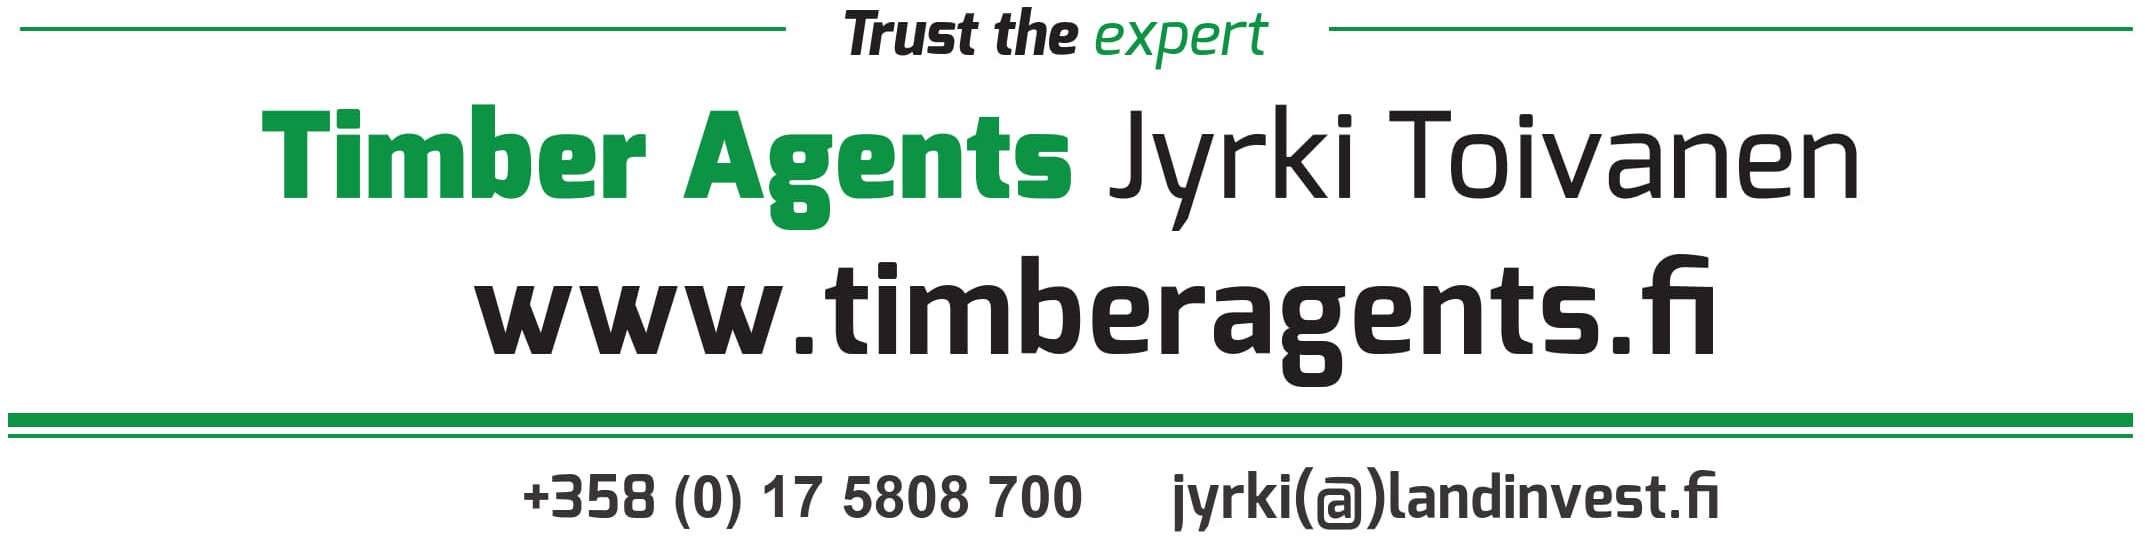 Jyrki Toivanen Timber Agents